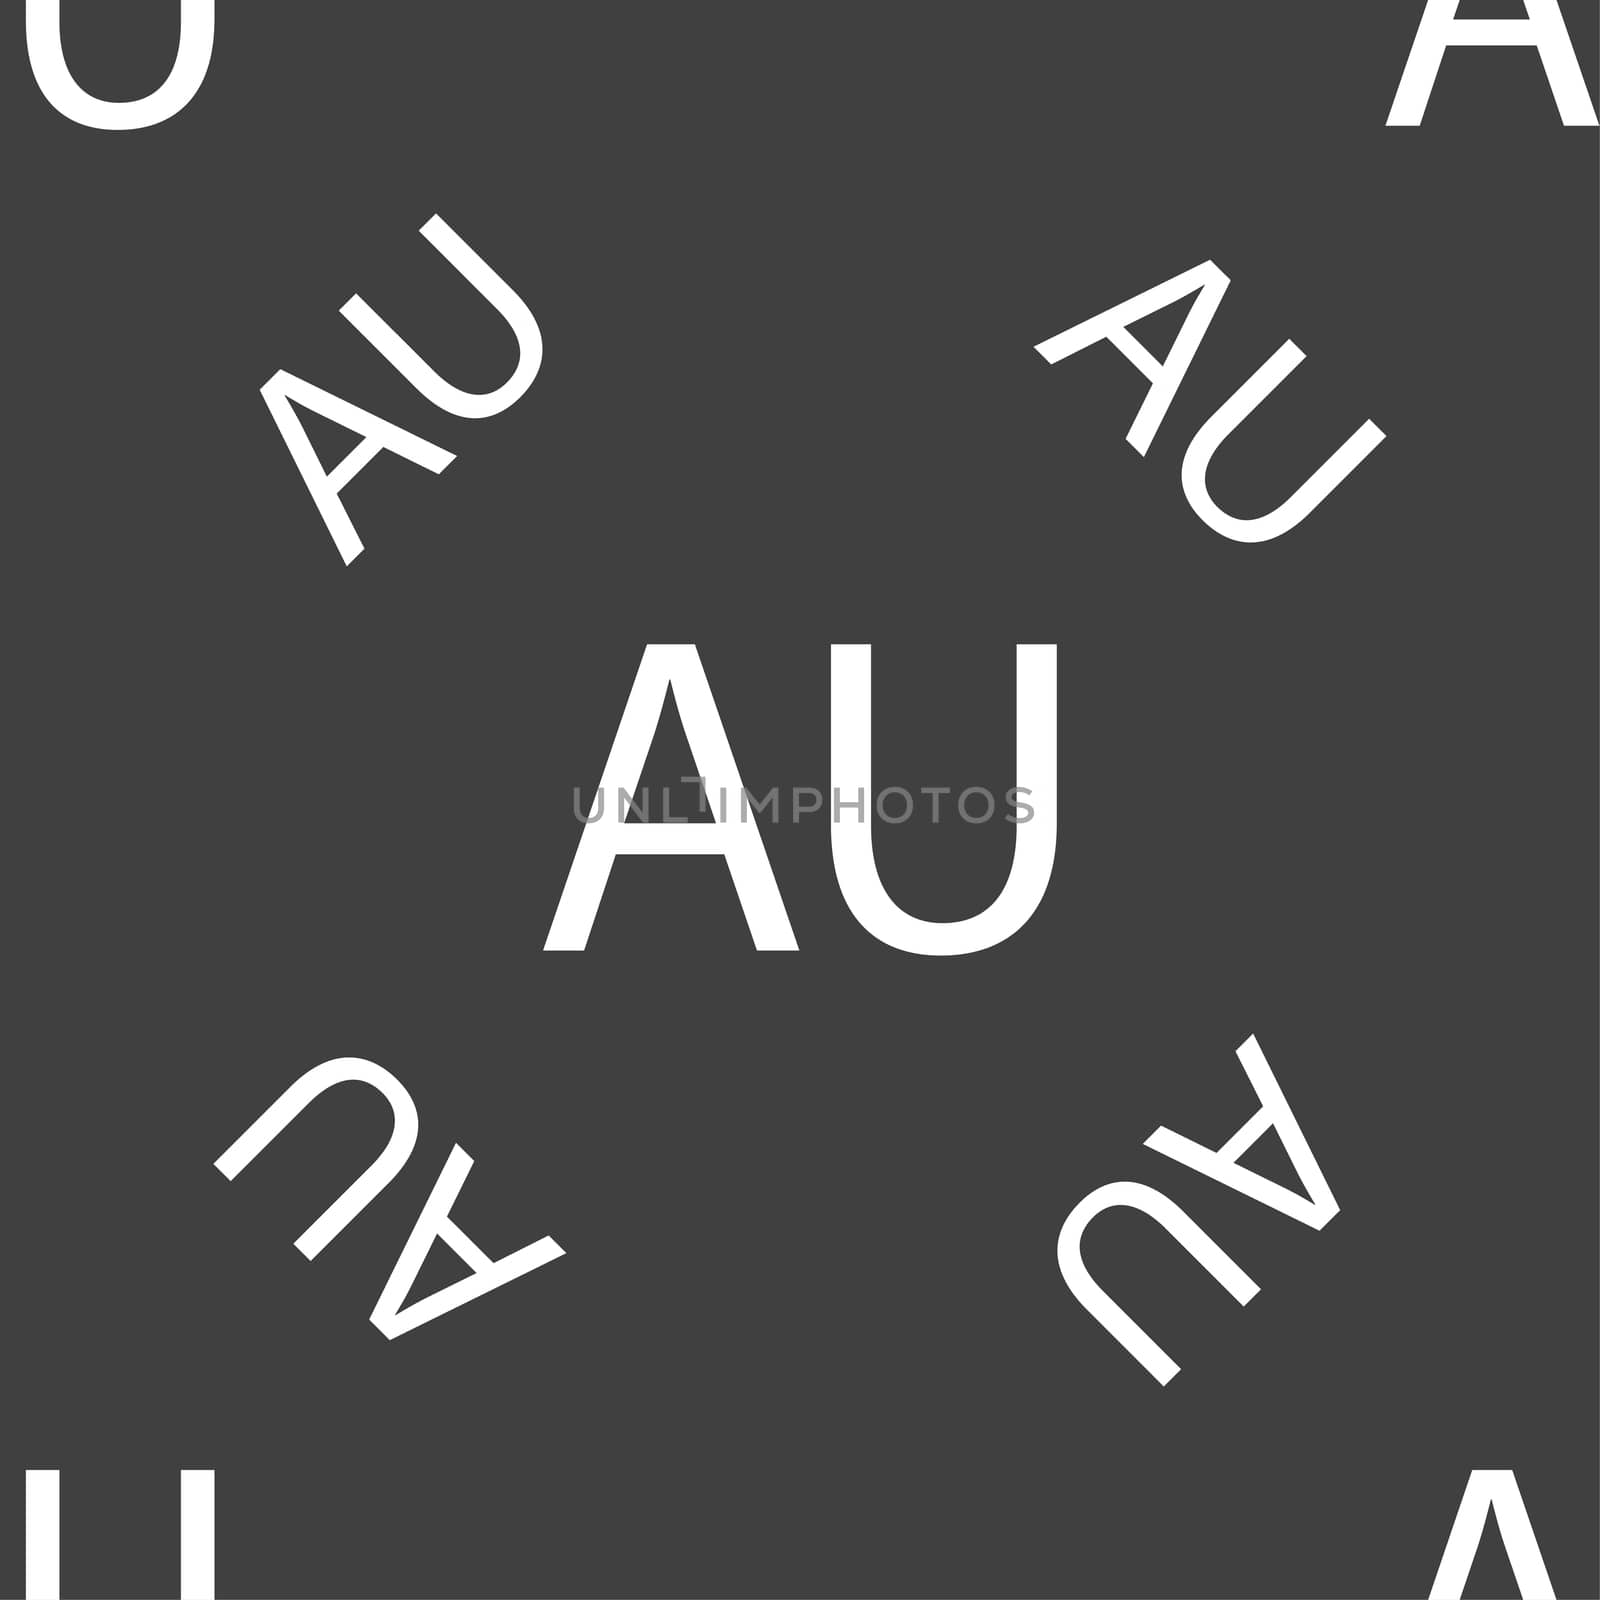 australia sign icon. Seamless pattern on a gray background.  by serhii_lohvyniuk